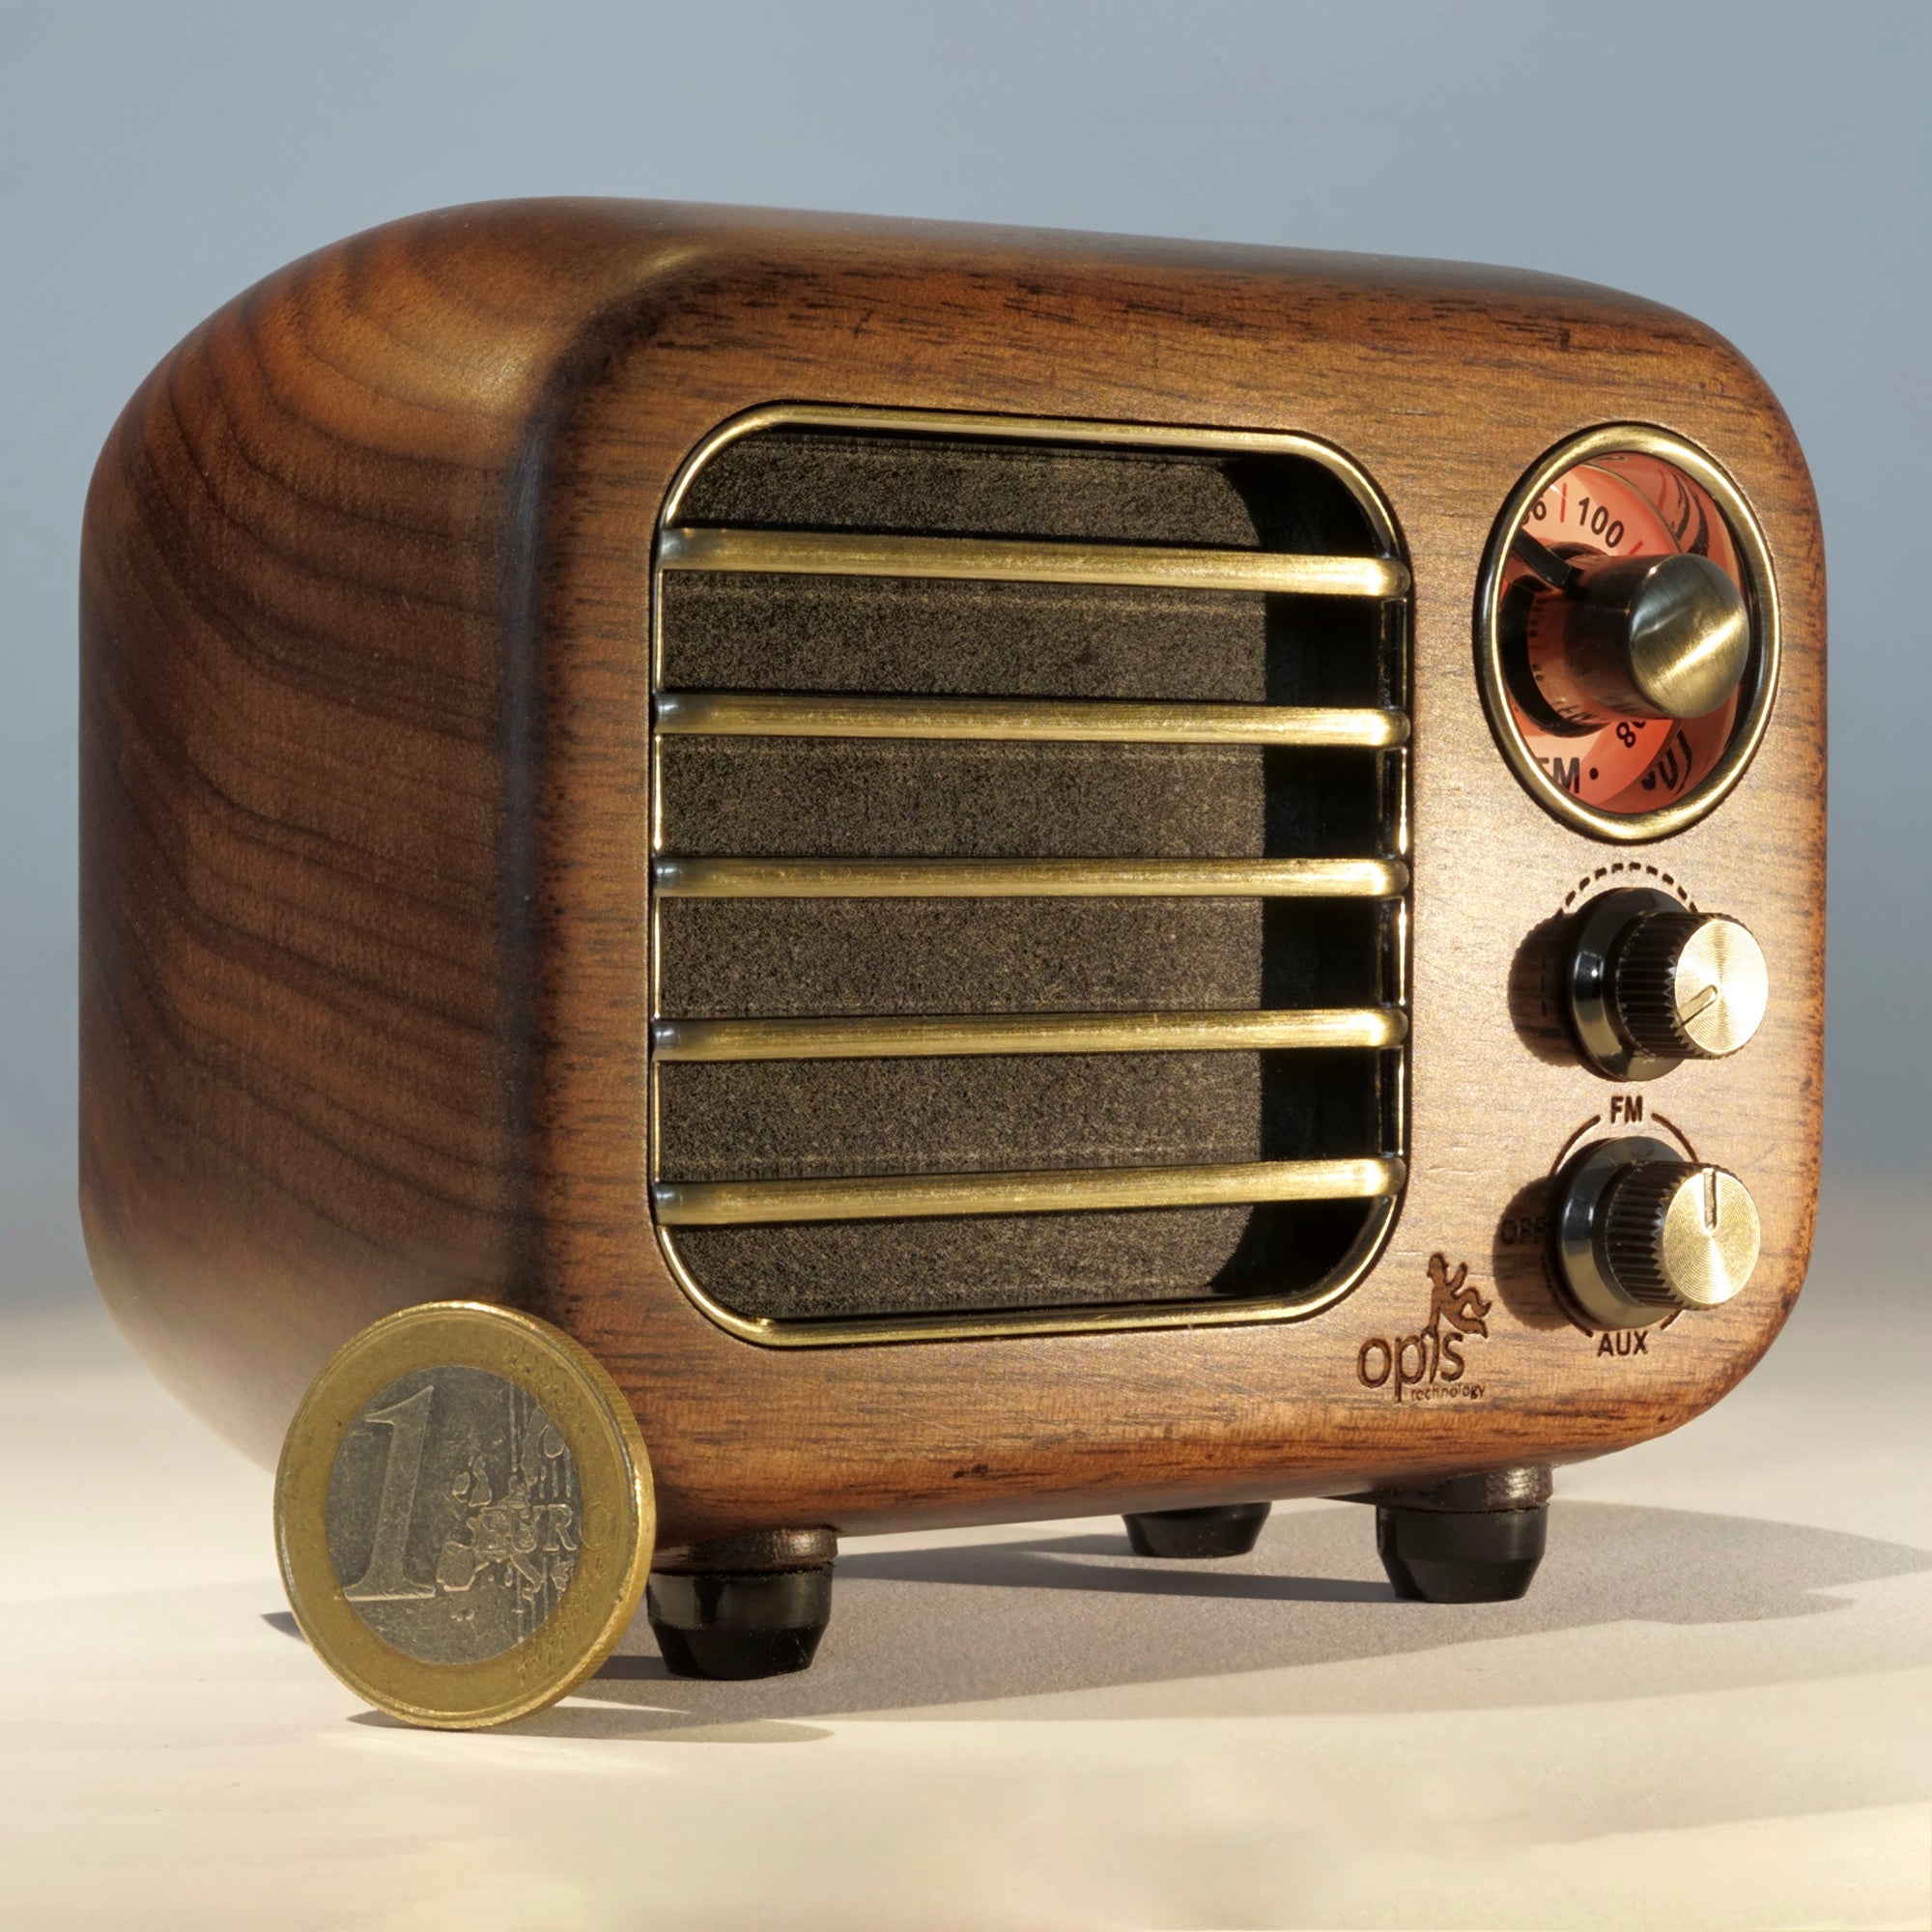 Opis Radio 3 – Small Wooden Retro Bluetooth Speaker and VHF Radio (Cherry  Wood) - Opis Technology